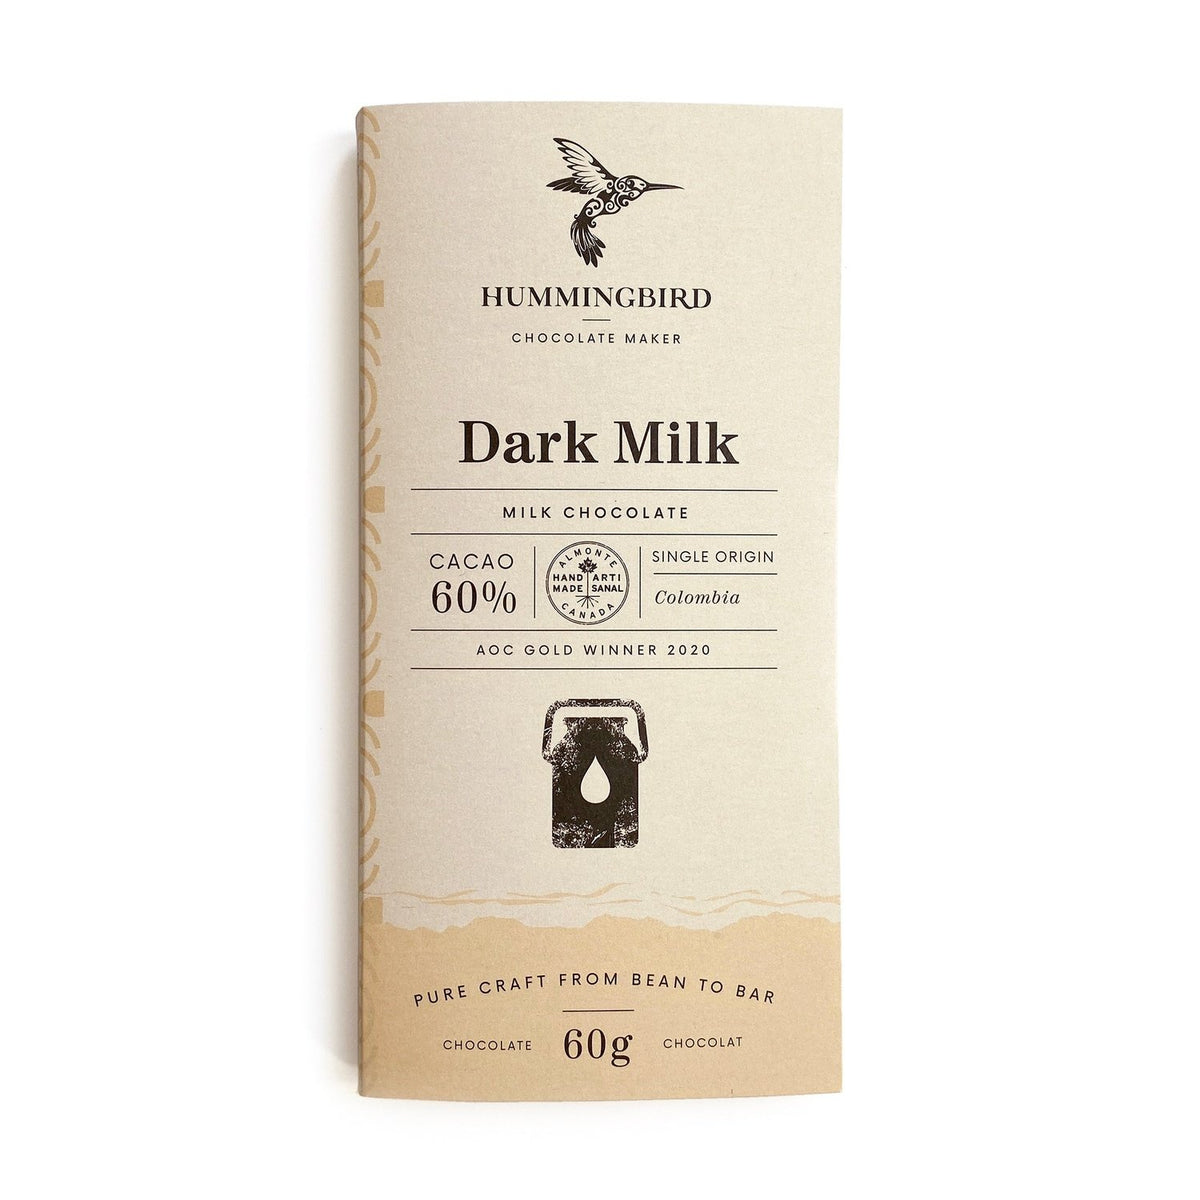 Hummingbird Chocolate Maker - Dark Milk bar, Milk Chocolate, 60% cacao, single origin Colombia, 60g.